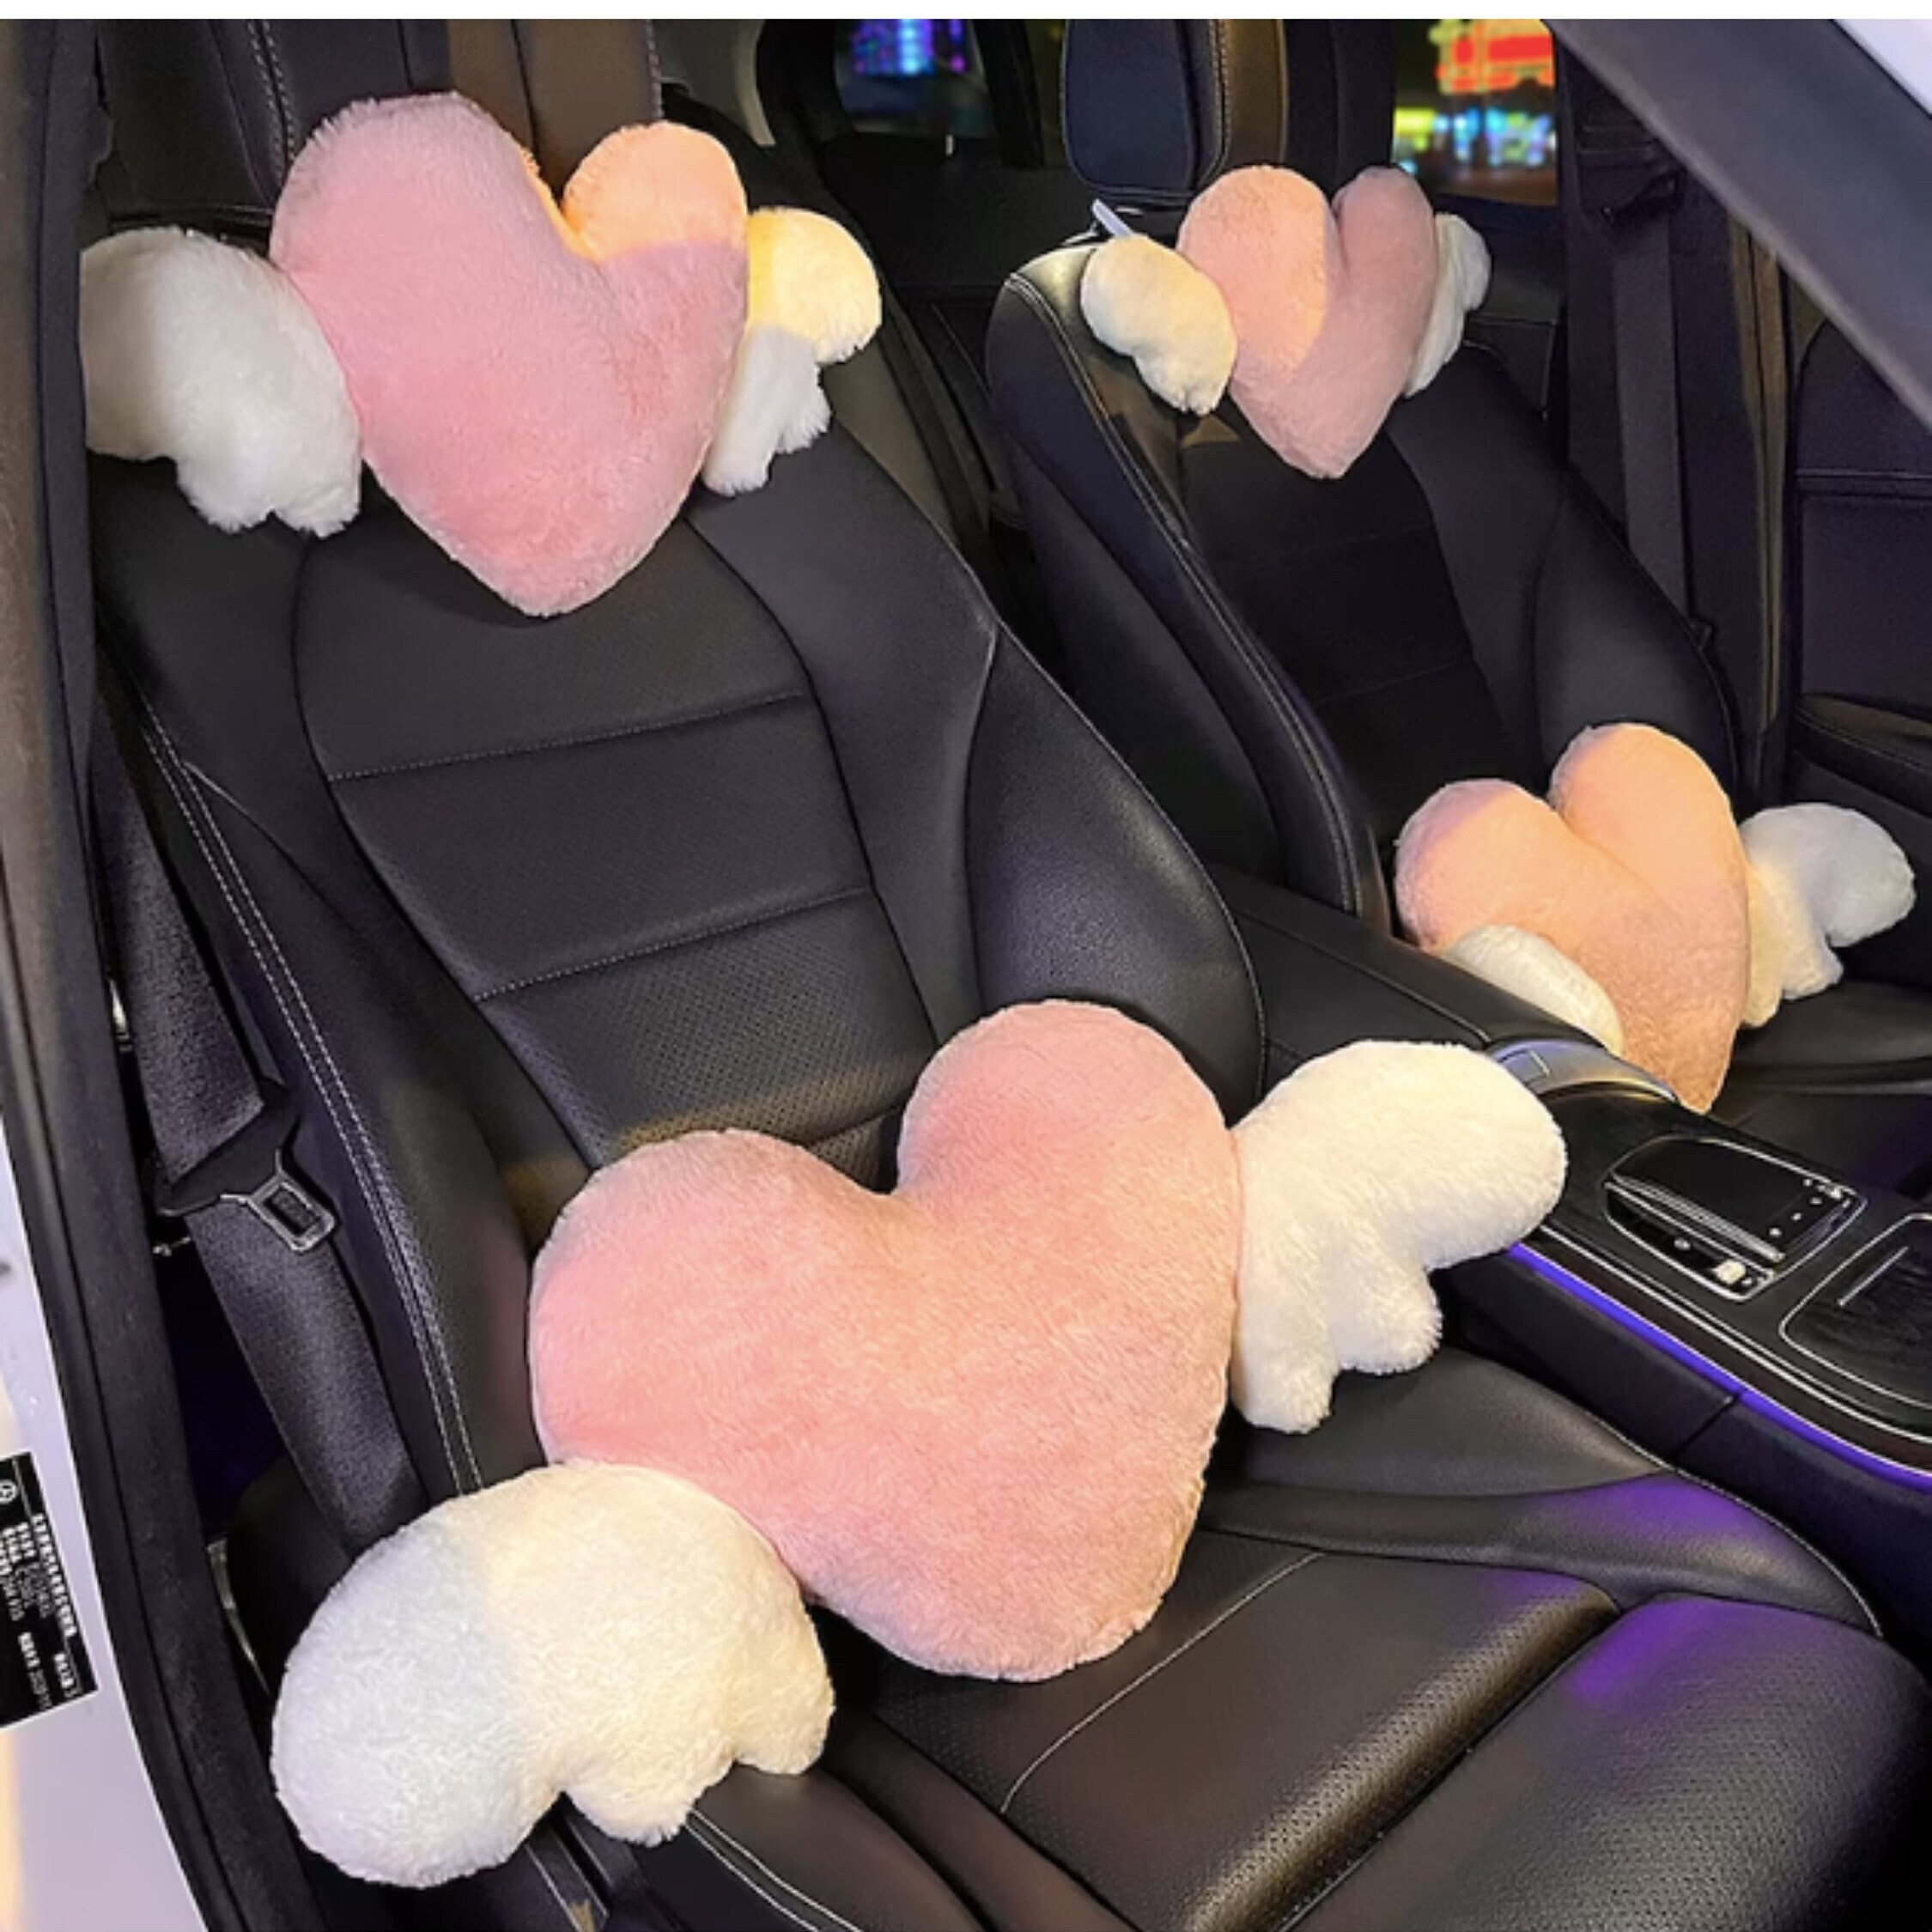 2PCS Leather Car Headrest Neck Support Pillow Seat Emblem Cushion For  Hyundai Accessories